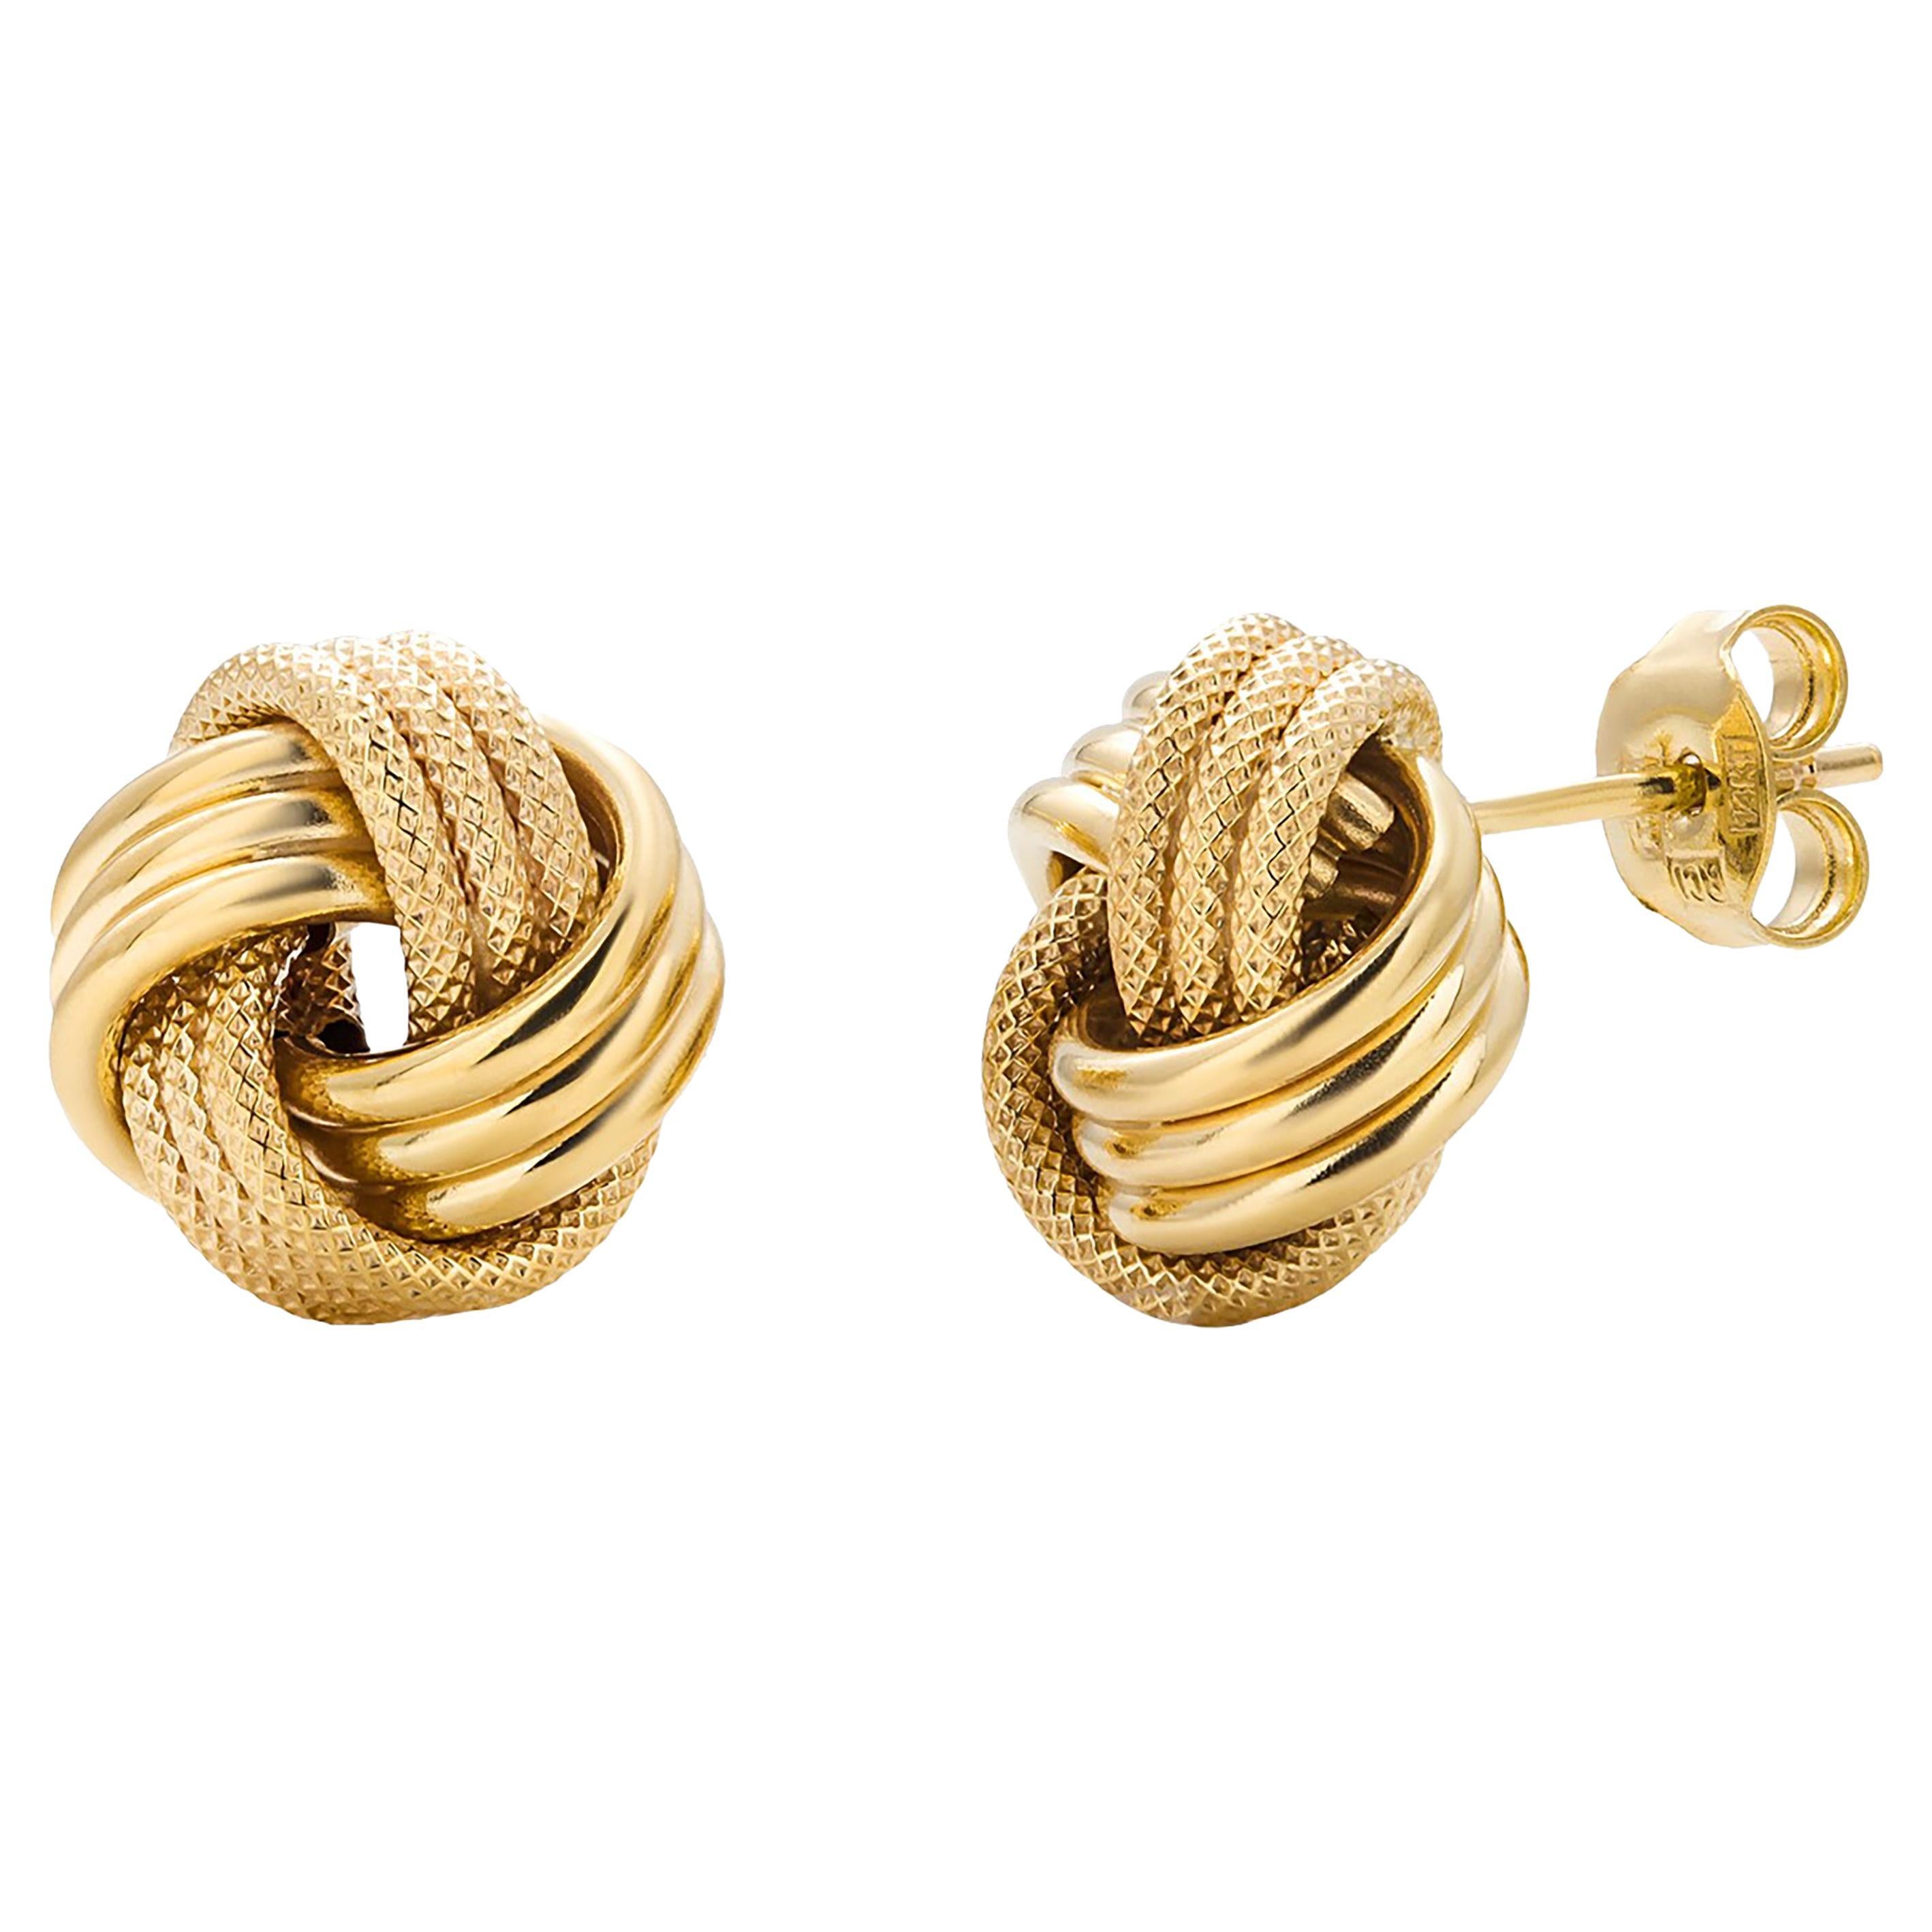  Three Rows Love Knot 0.50 Inch 14 Karat Yellow Gold Stud Earrings